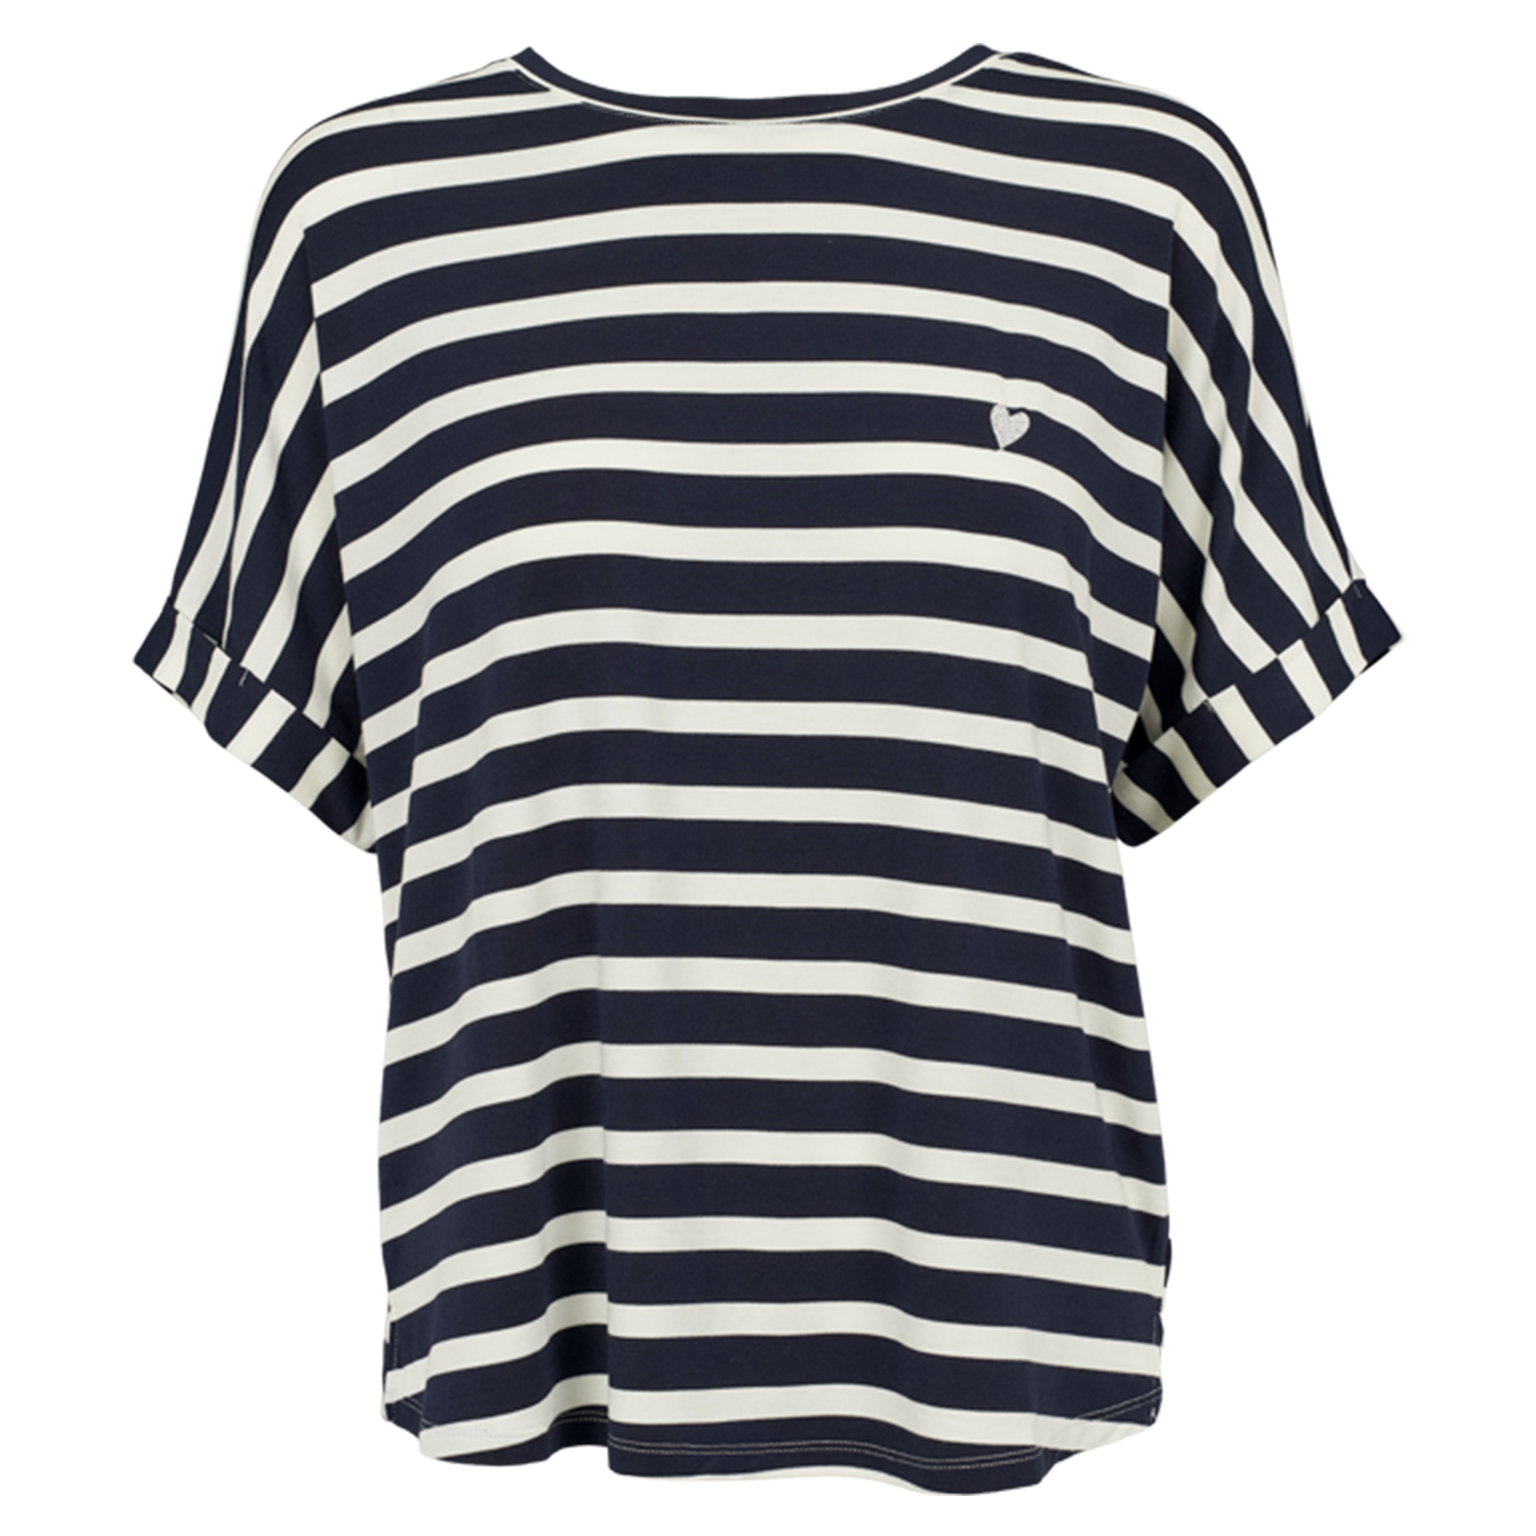 Blød stribet t-shirt i hvid og navy